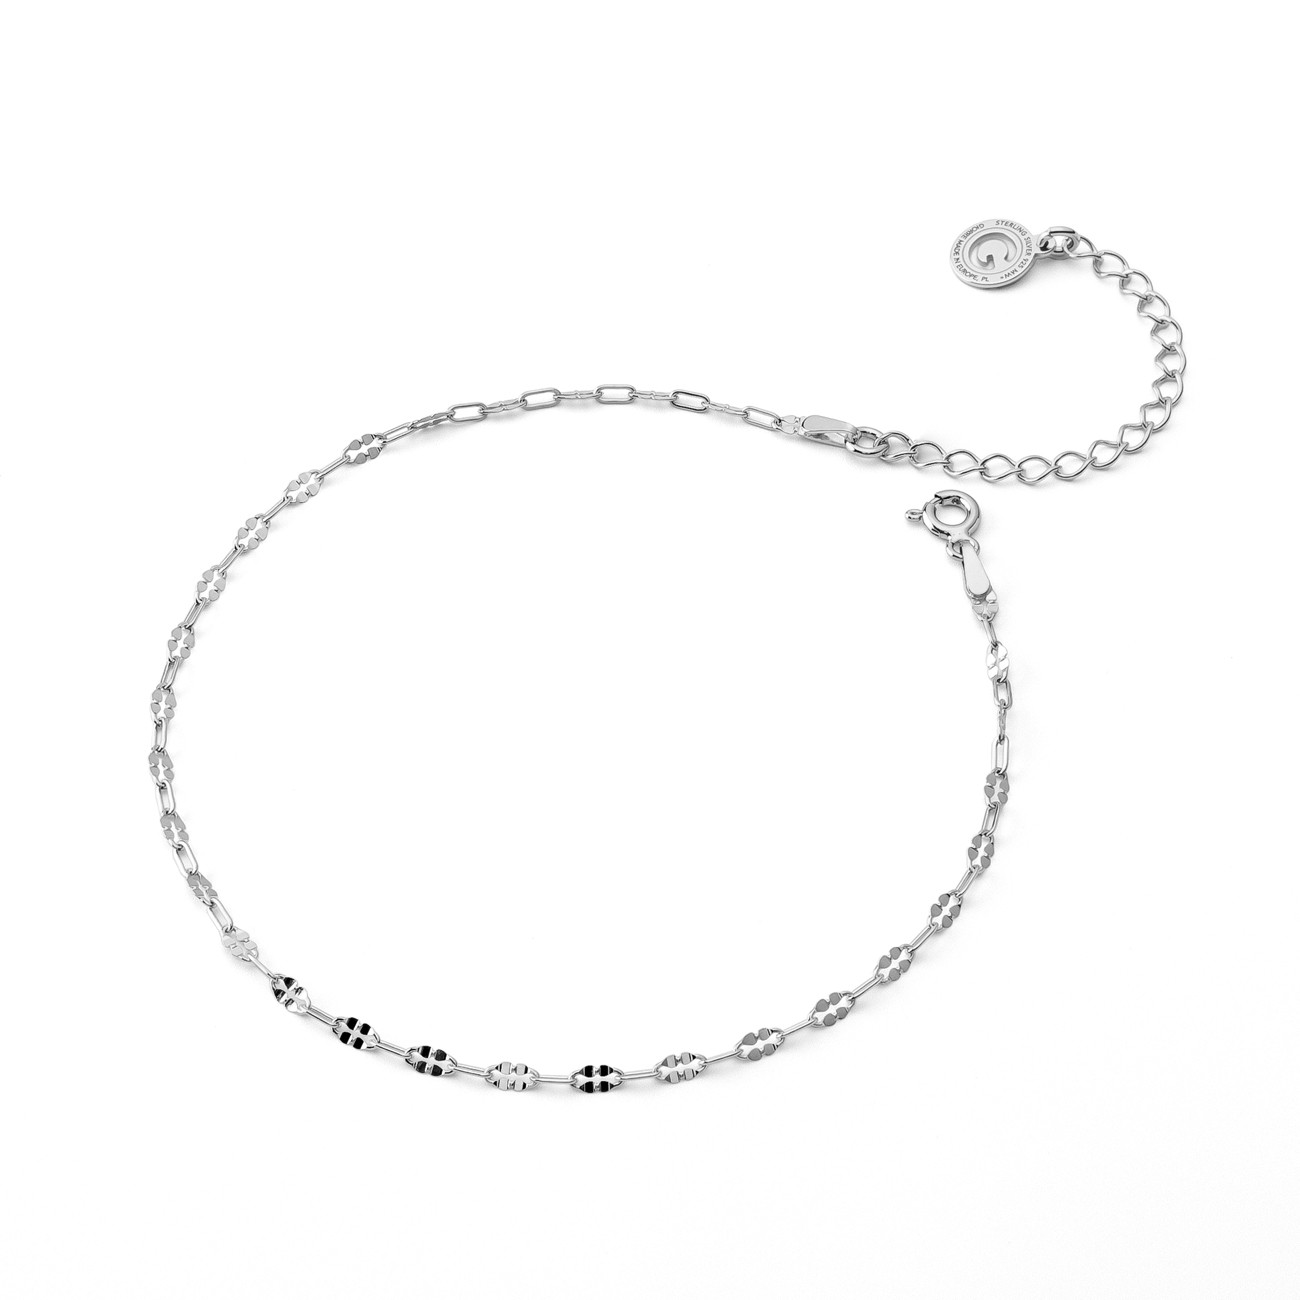 Delicate ankle bracelet, sterling silver 925